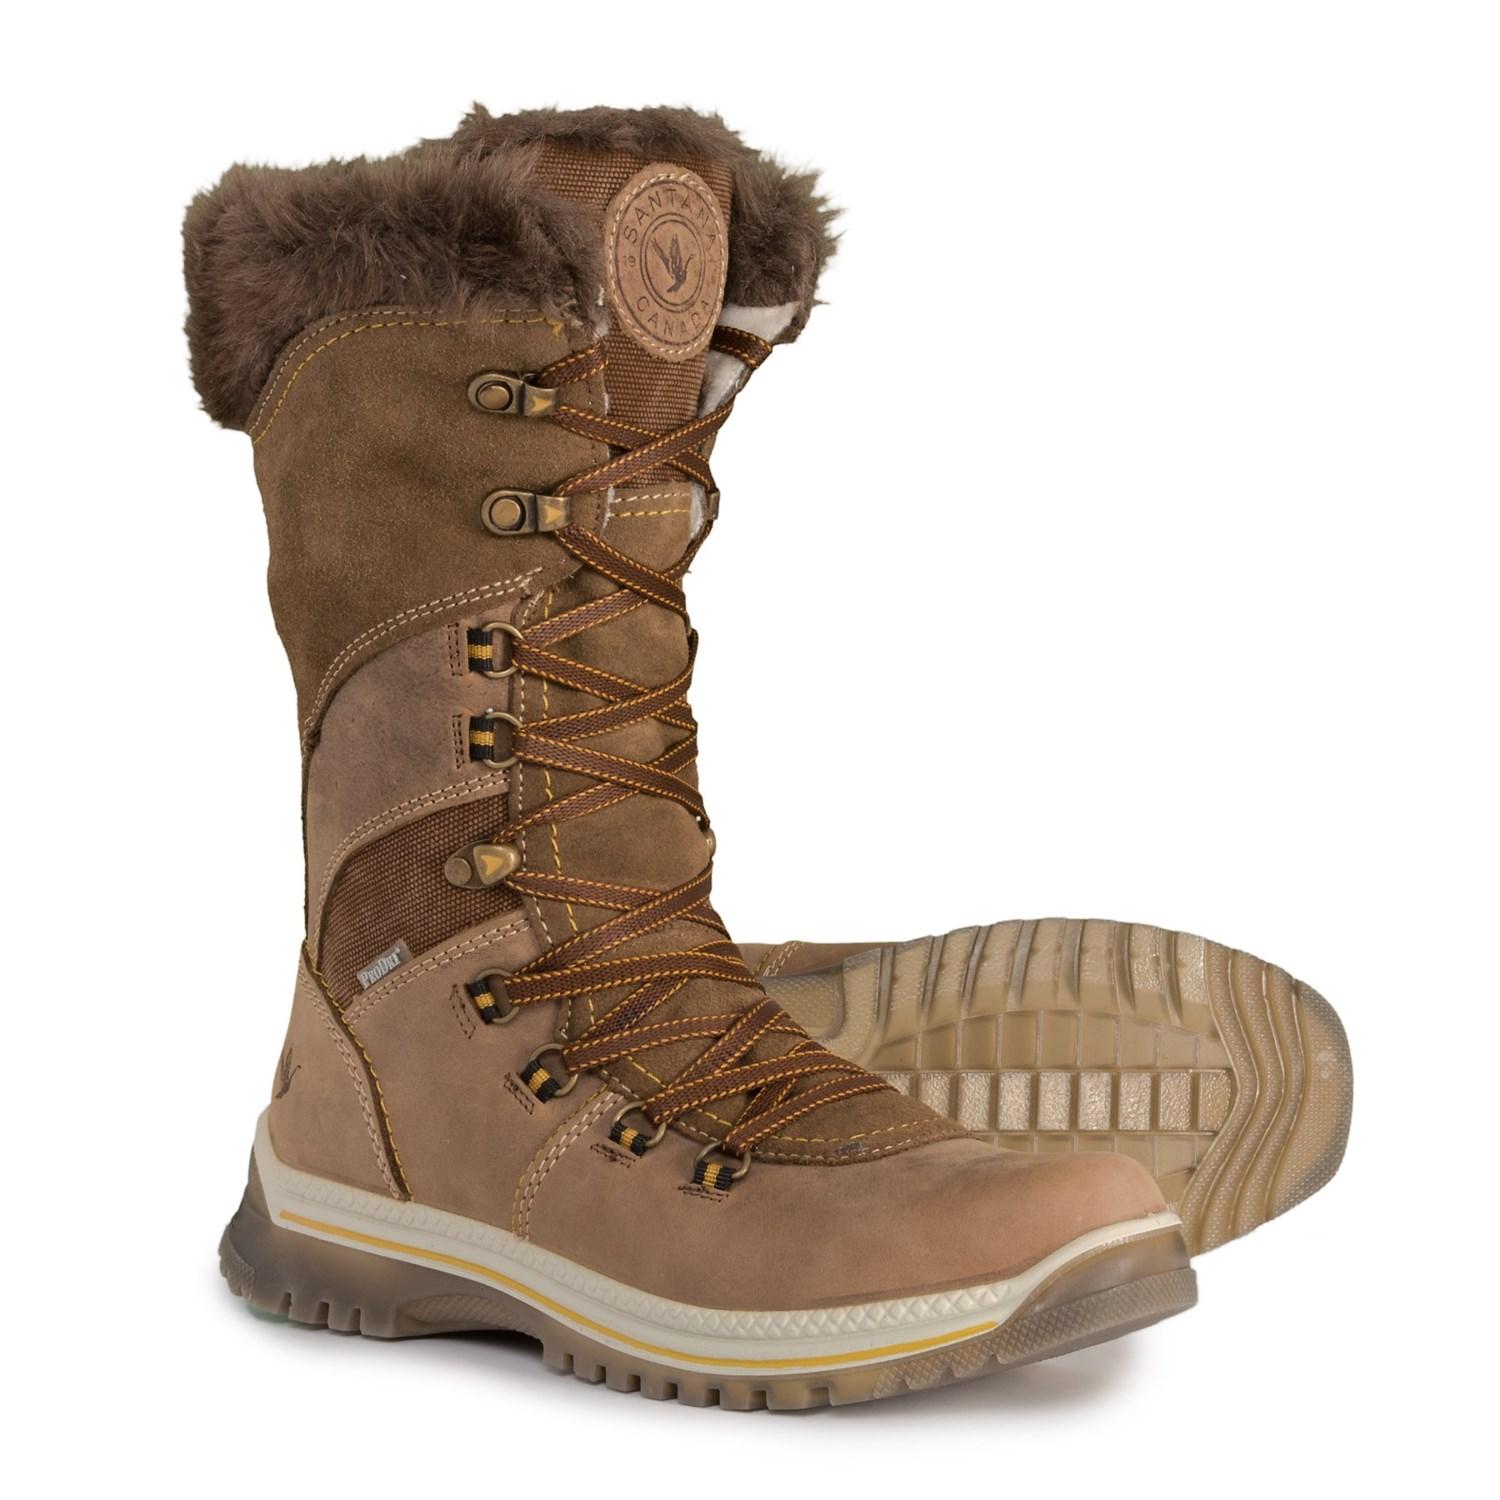 Santana Canada Morella Tall Winter Boots in Brown - Lyst